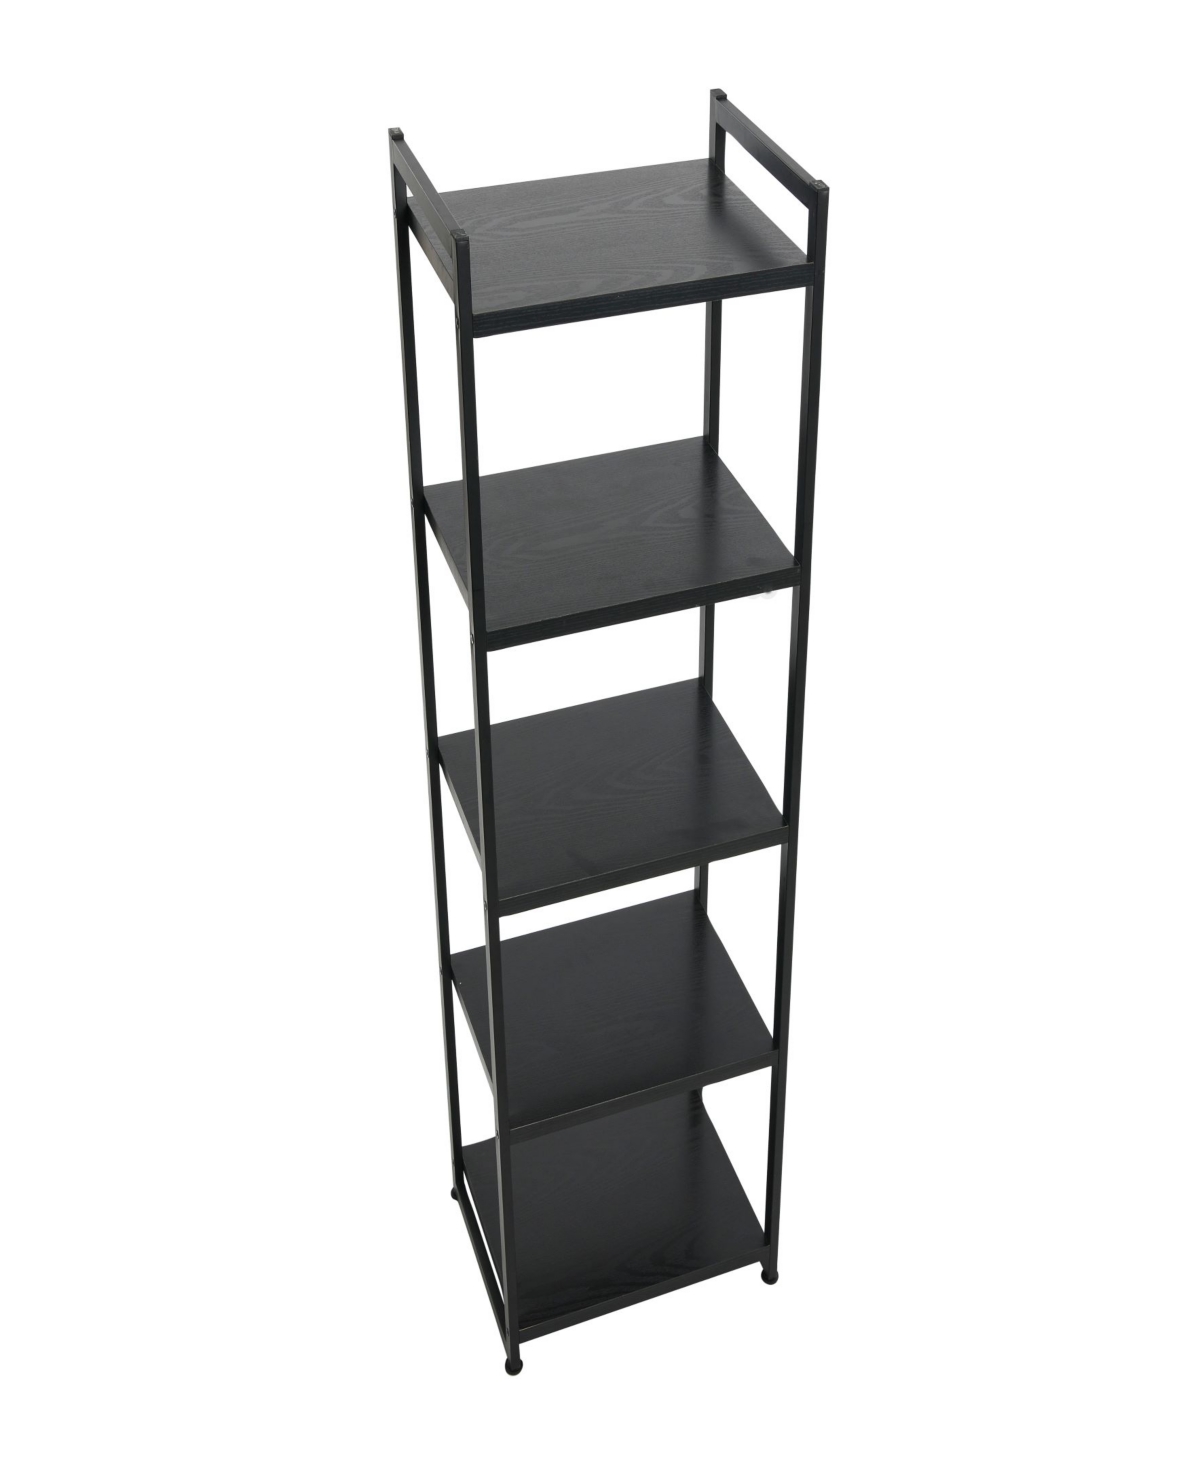 Shop Household Essentials Tower Bookshelf, Tall And Narrow Bookshelf With 5 Shelves In Black